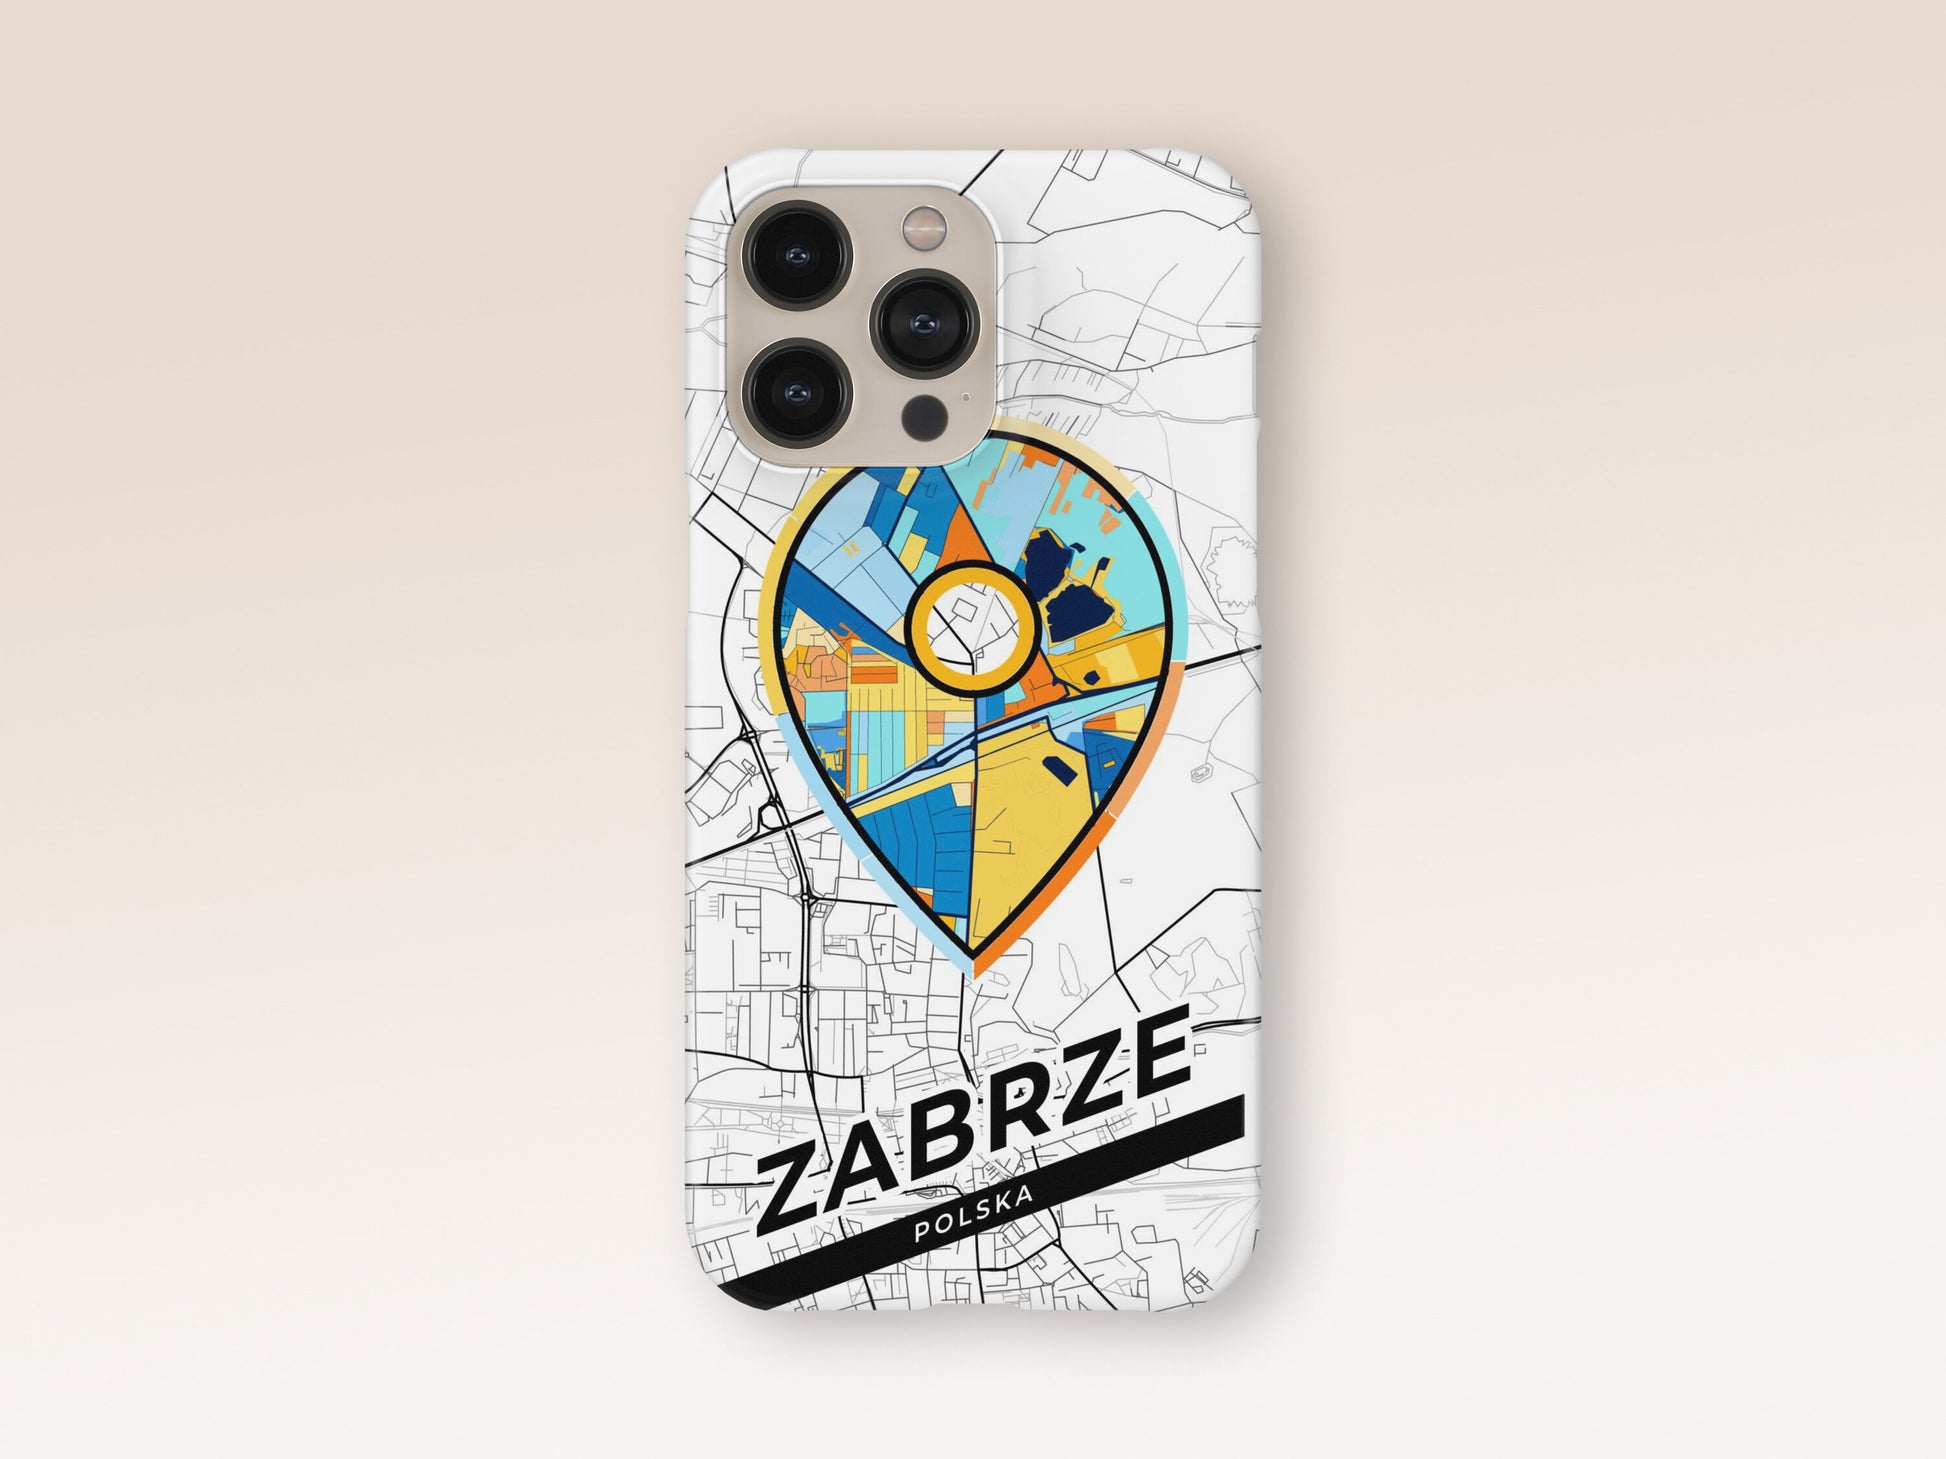 Zabrze Poland slim phone case with colorful icon 1